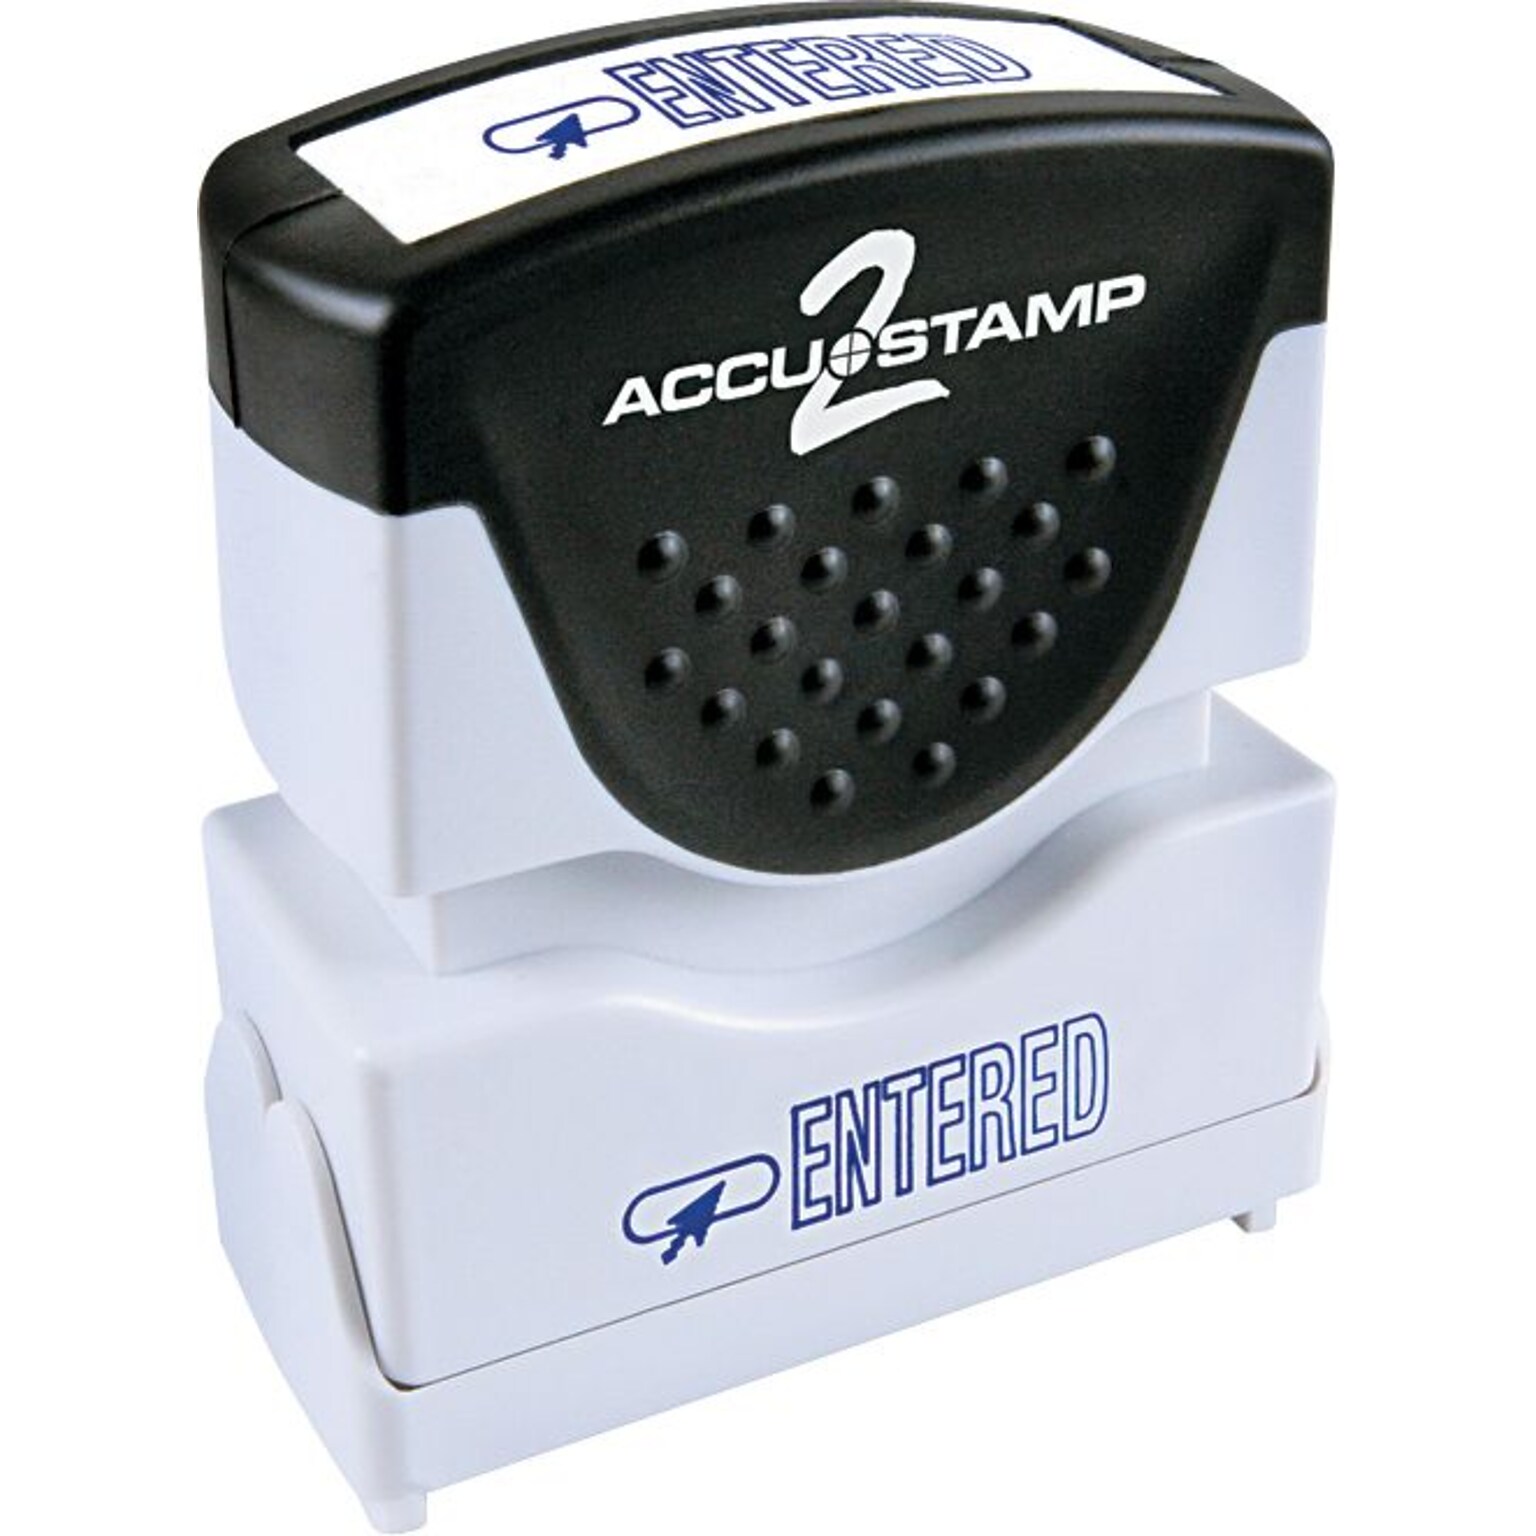 Accu-Stamp2® One-Color Pre-Inked Shutter Message Stamp, ENTERED, 1/2 x 1-5/8 Impression, Blue Ink (035573)